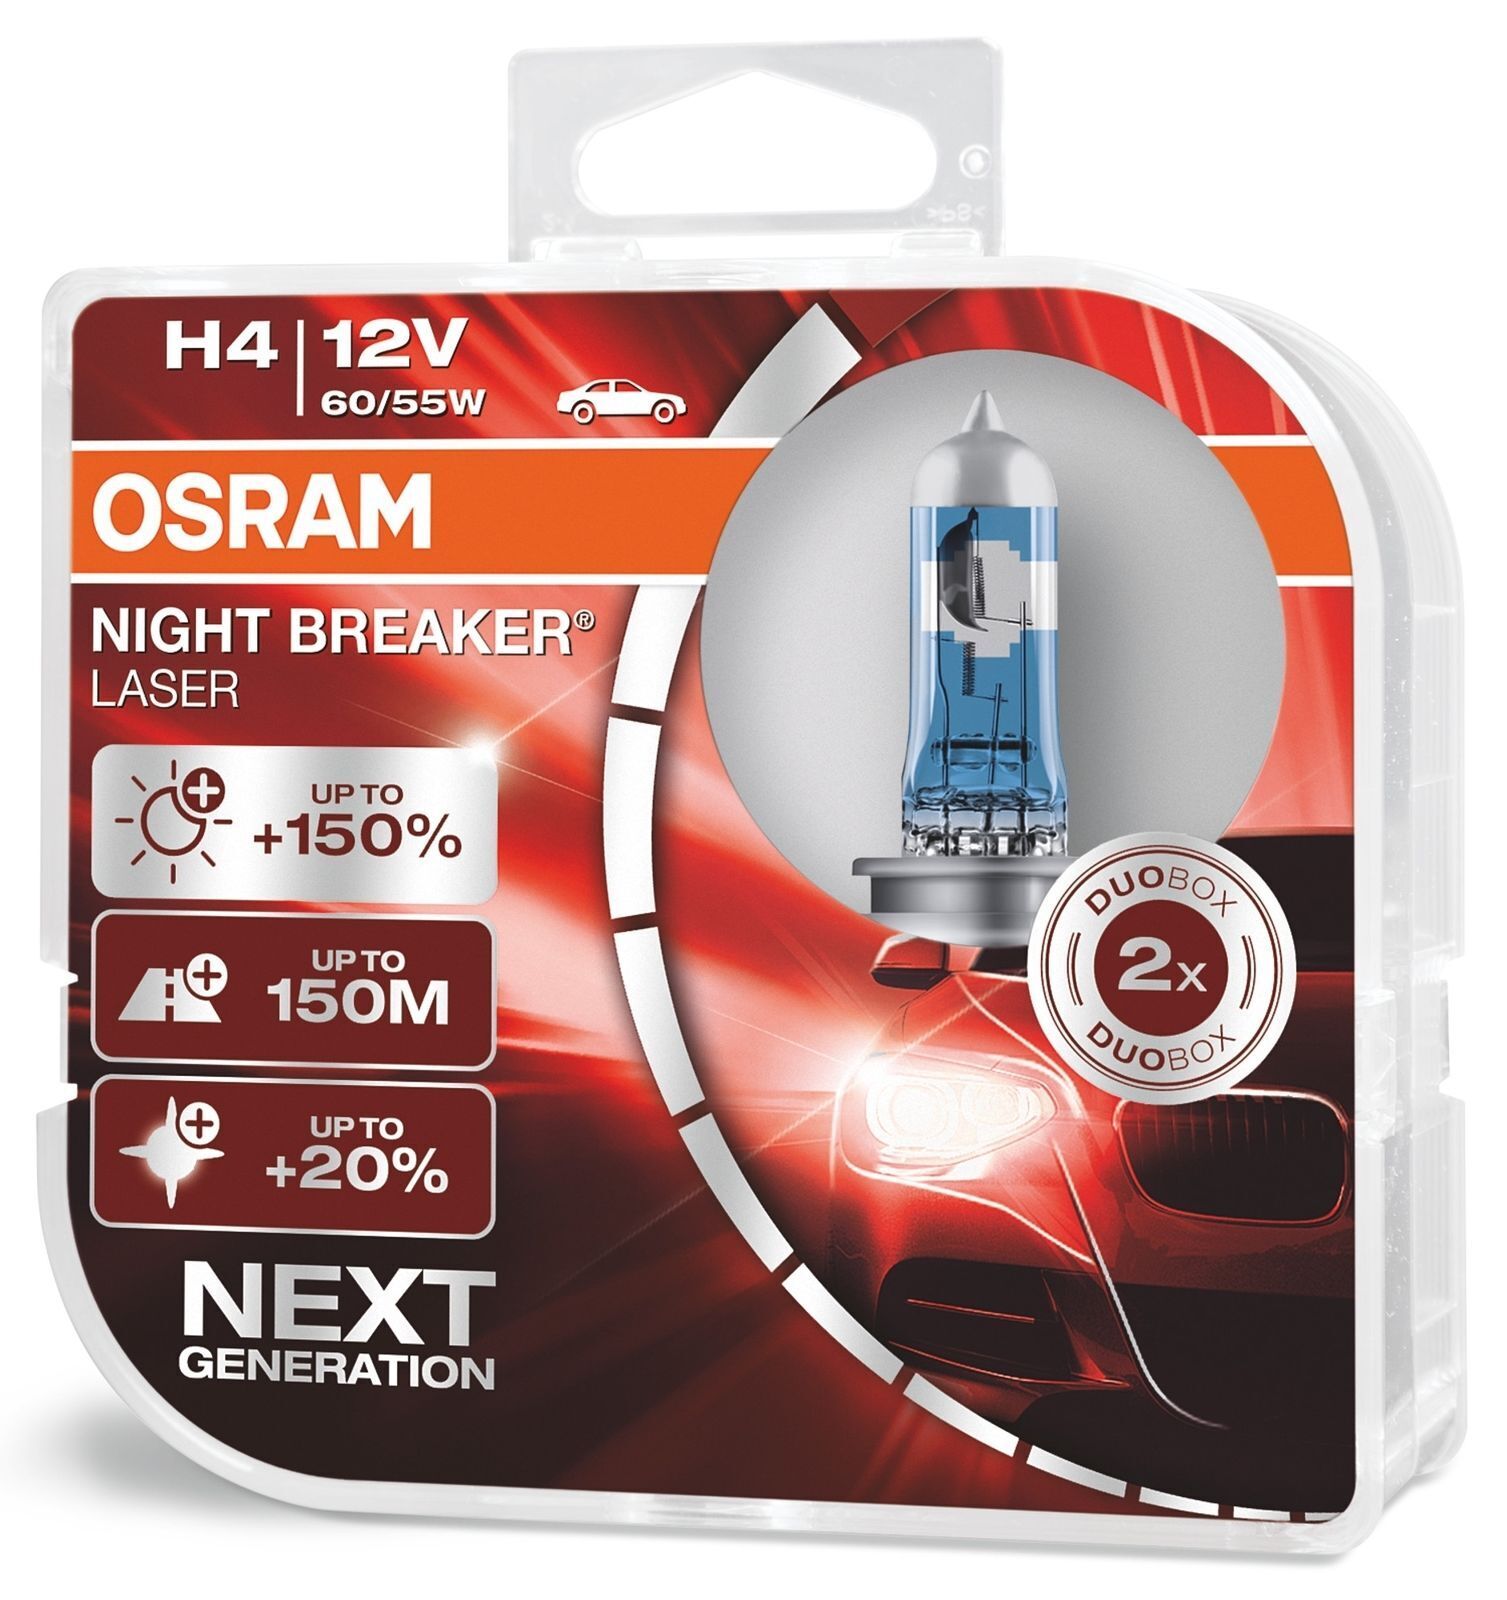 Osram H4 12V 60/55W Night Breaker Laser (Next Generation) Twin Pack